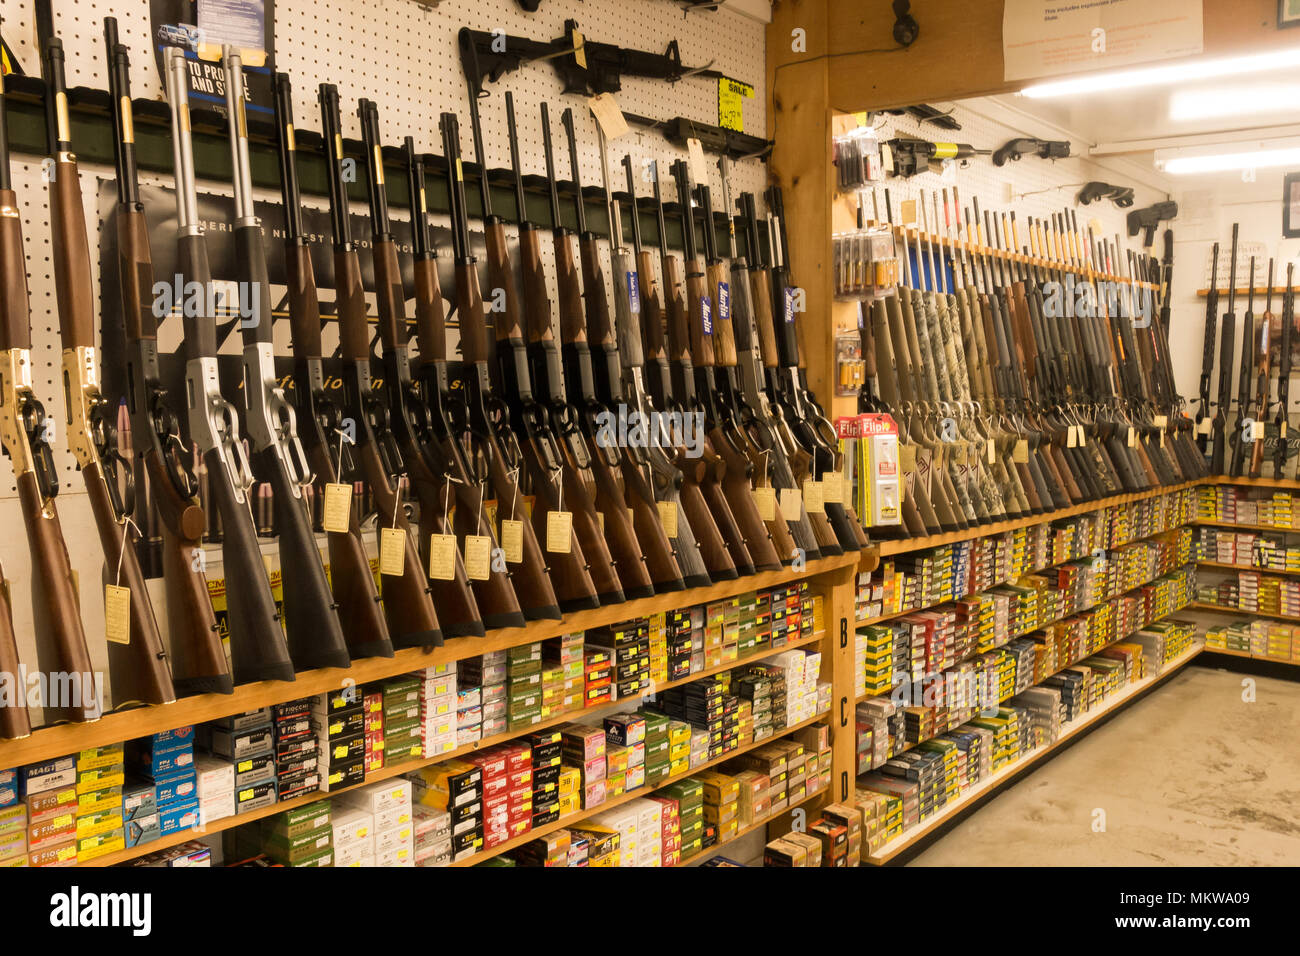 Un écran de fusils et munitions dans un magasin d'armes dans les Adirondacks, NY USA Banque D'Images